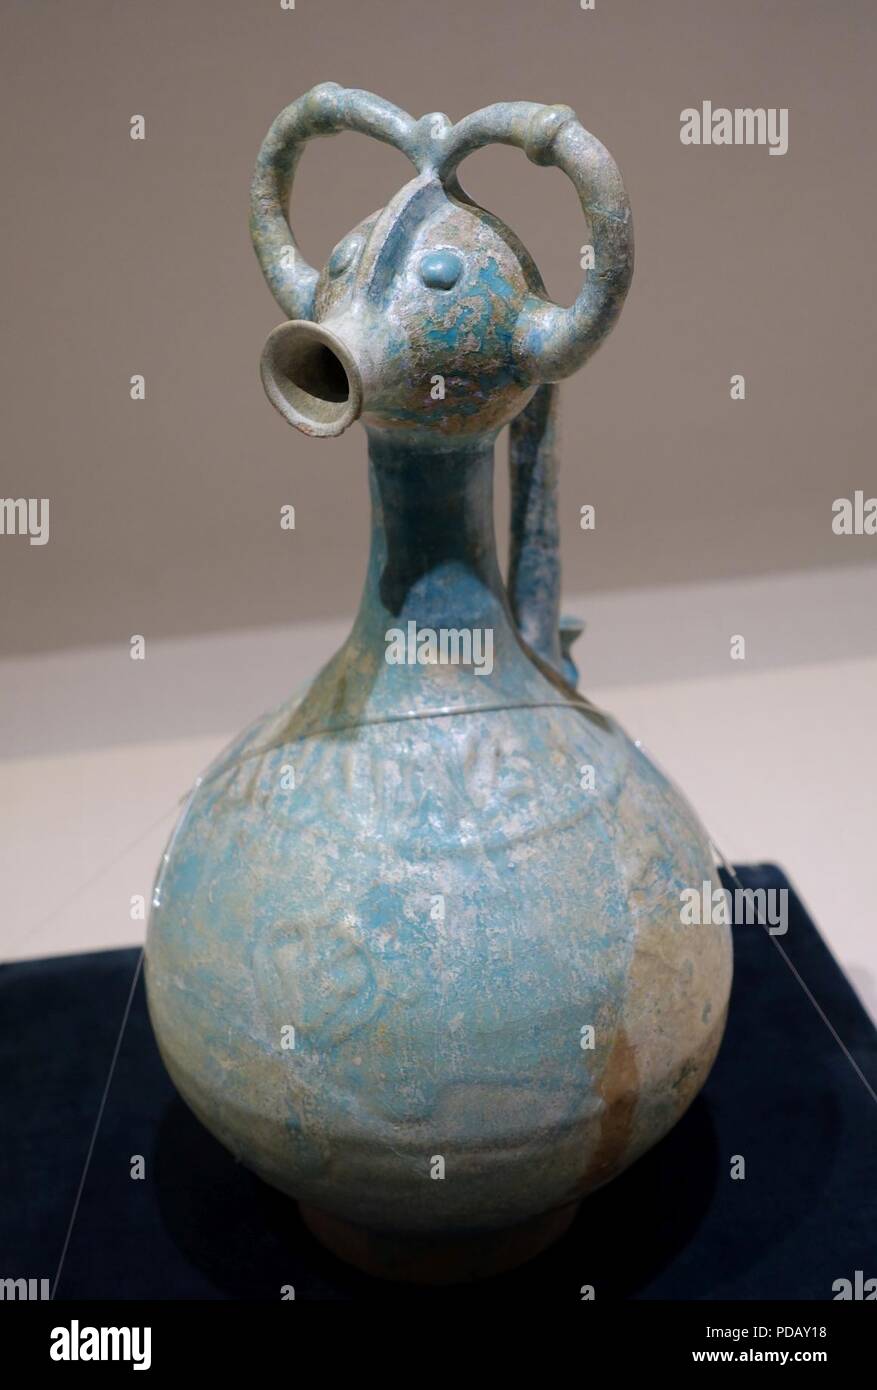 Animal-headed pitcher, Iran, 12th century AD, blue glaze with iridescence - Stock Photo